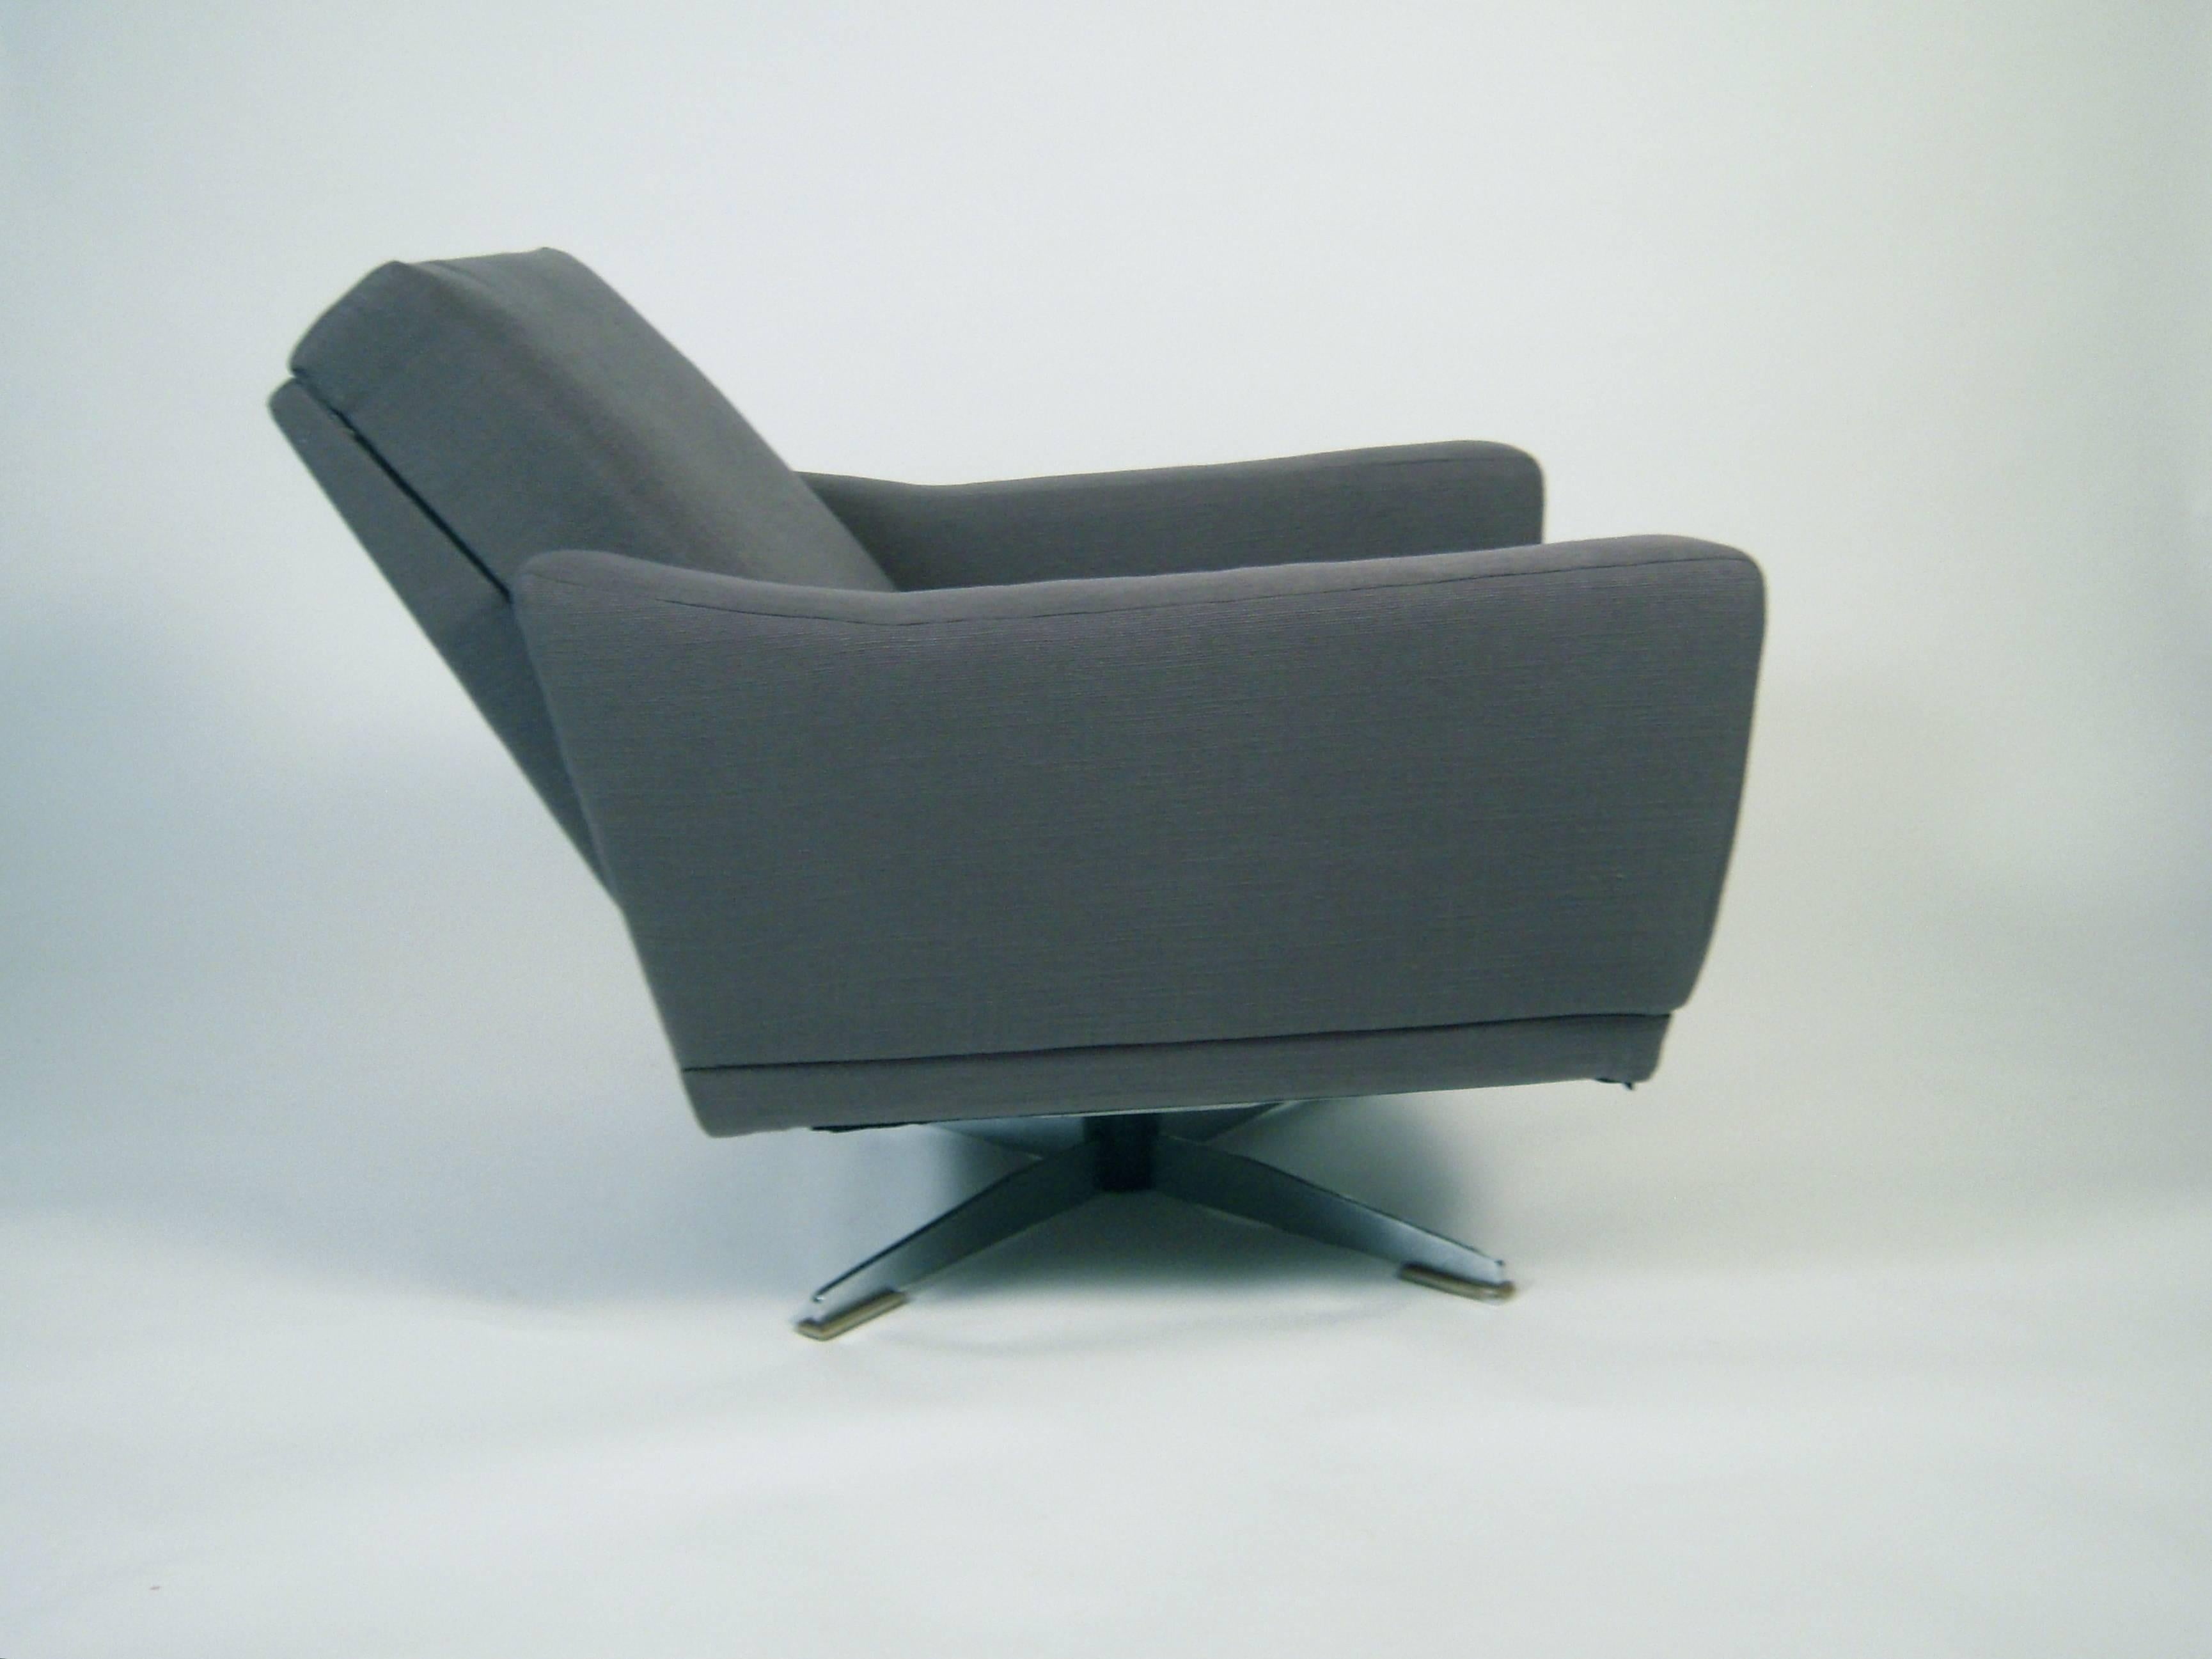 mid century modern swivel chairs